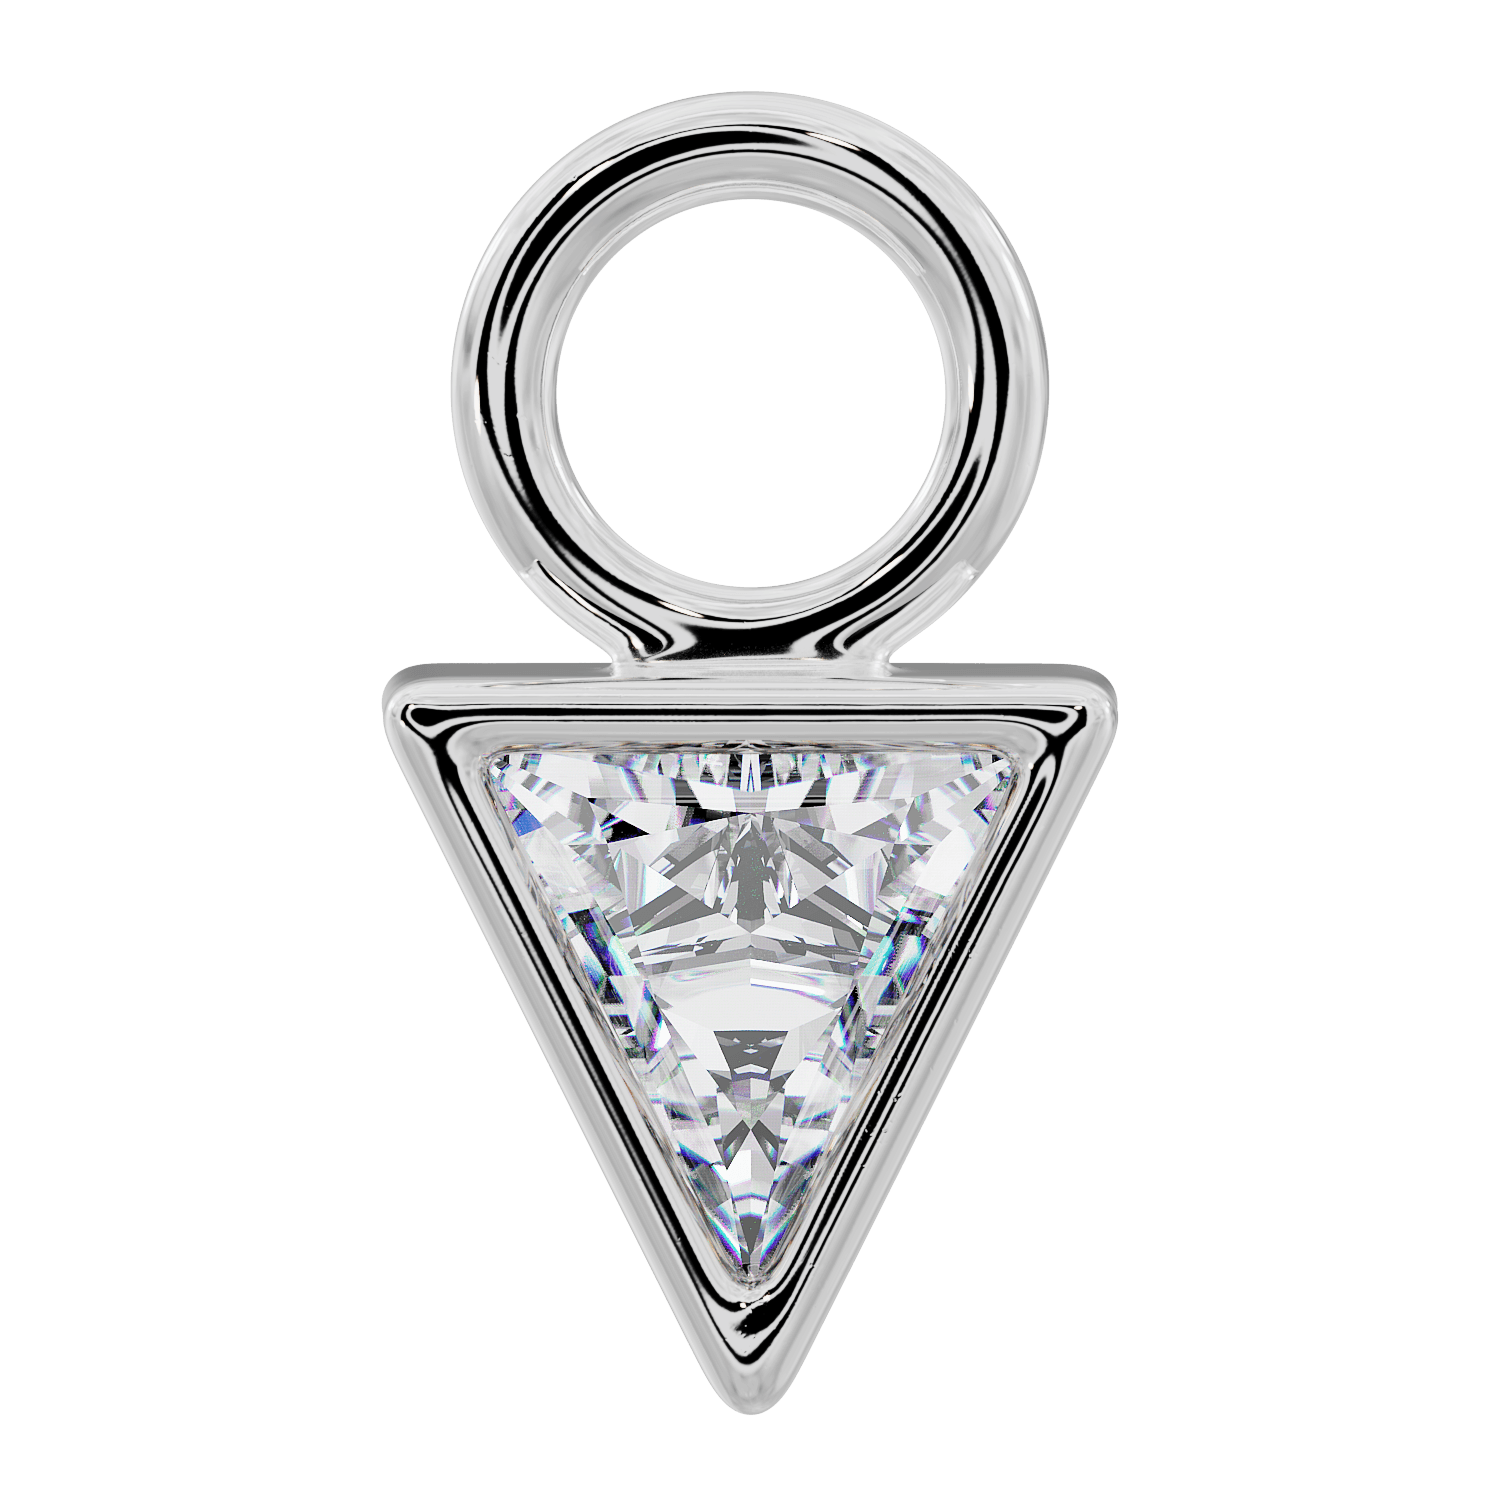 Triangle Diamond Charm Accessory for Piercing Jewelry-950 Platinum